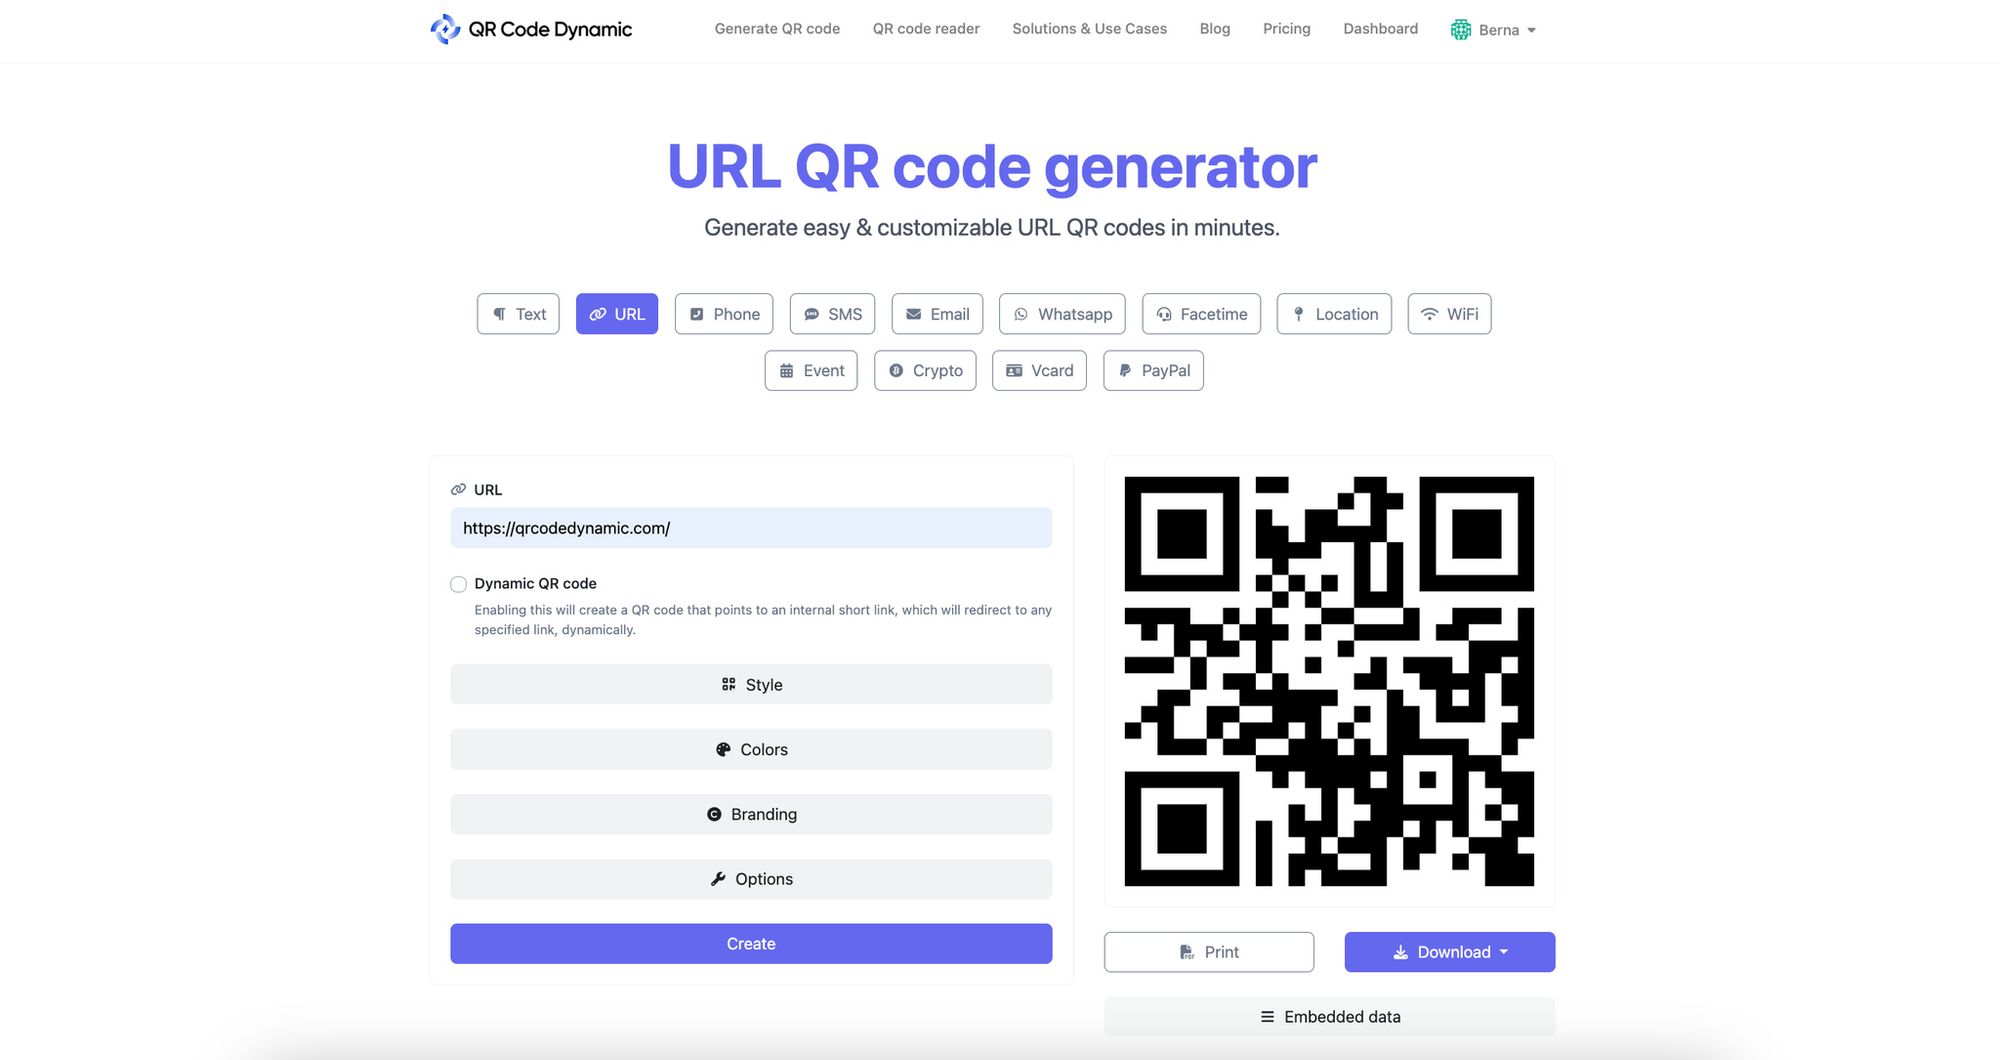 URL QR code generator page of QRCodeDynamic